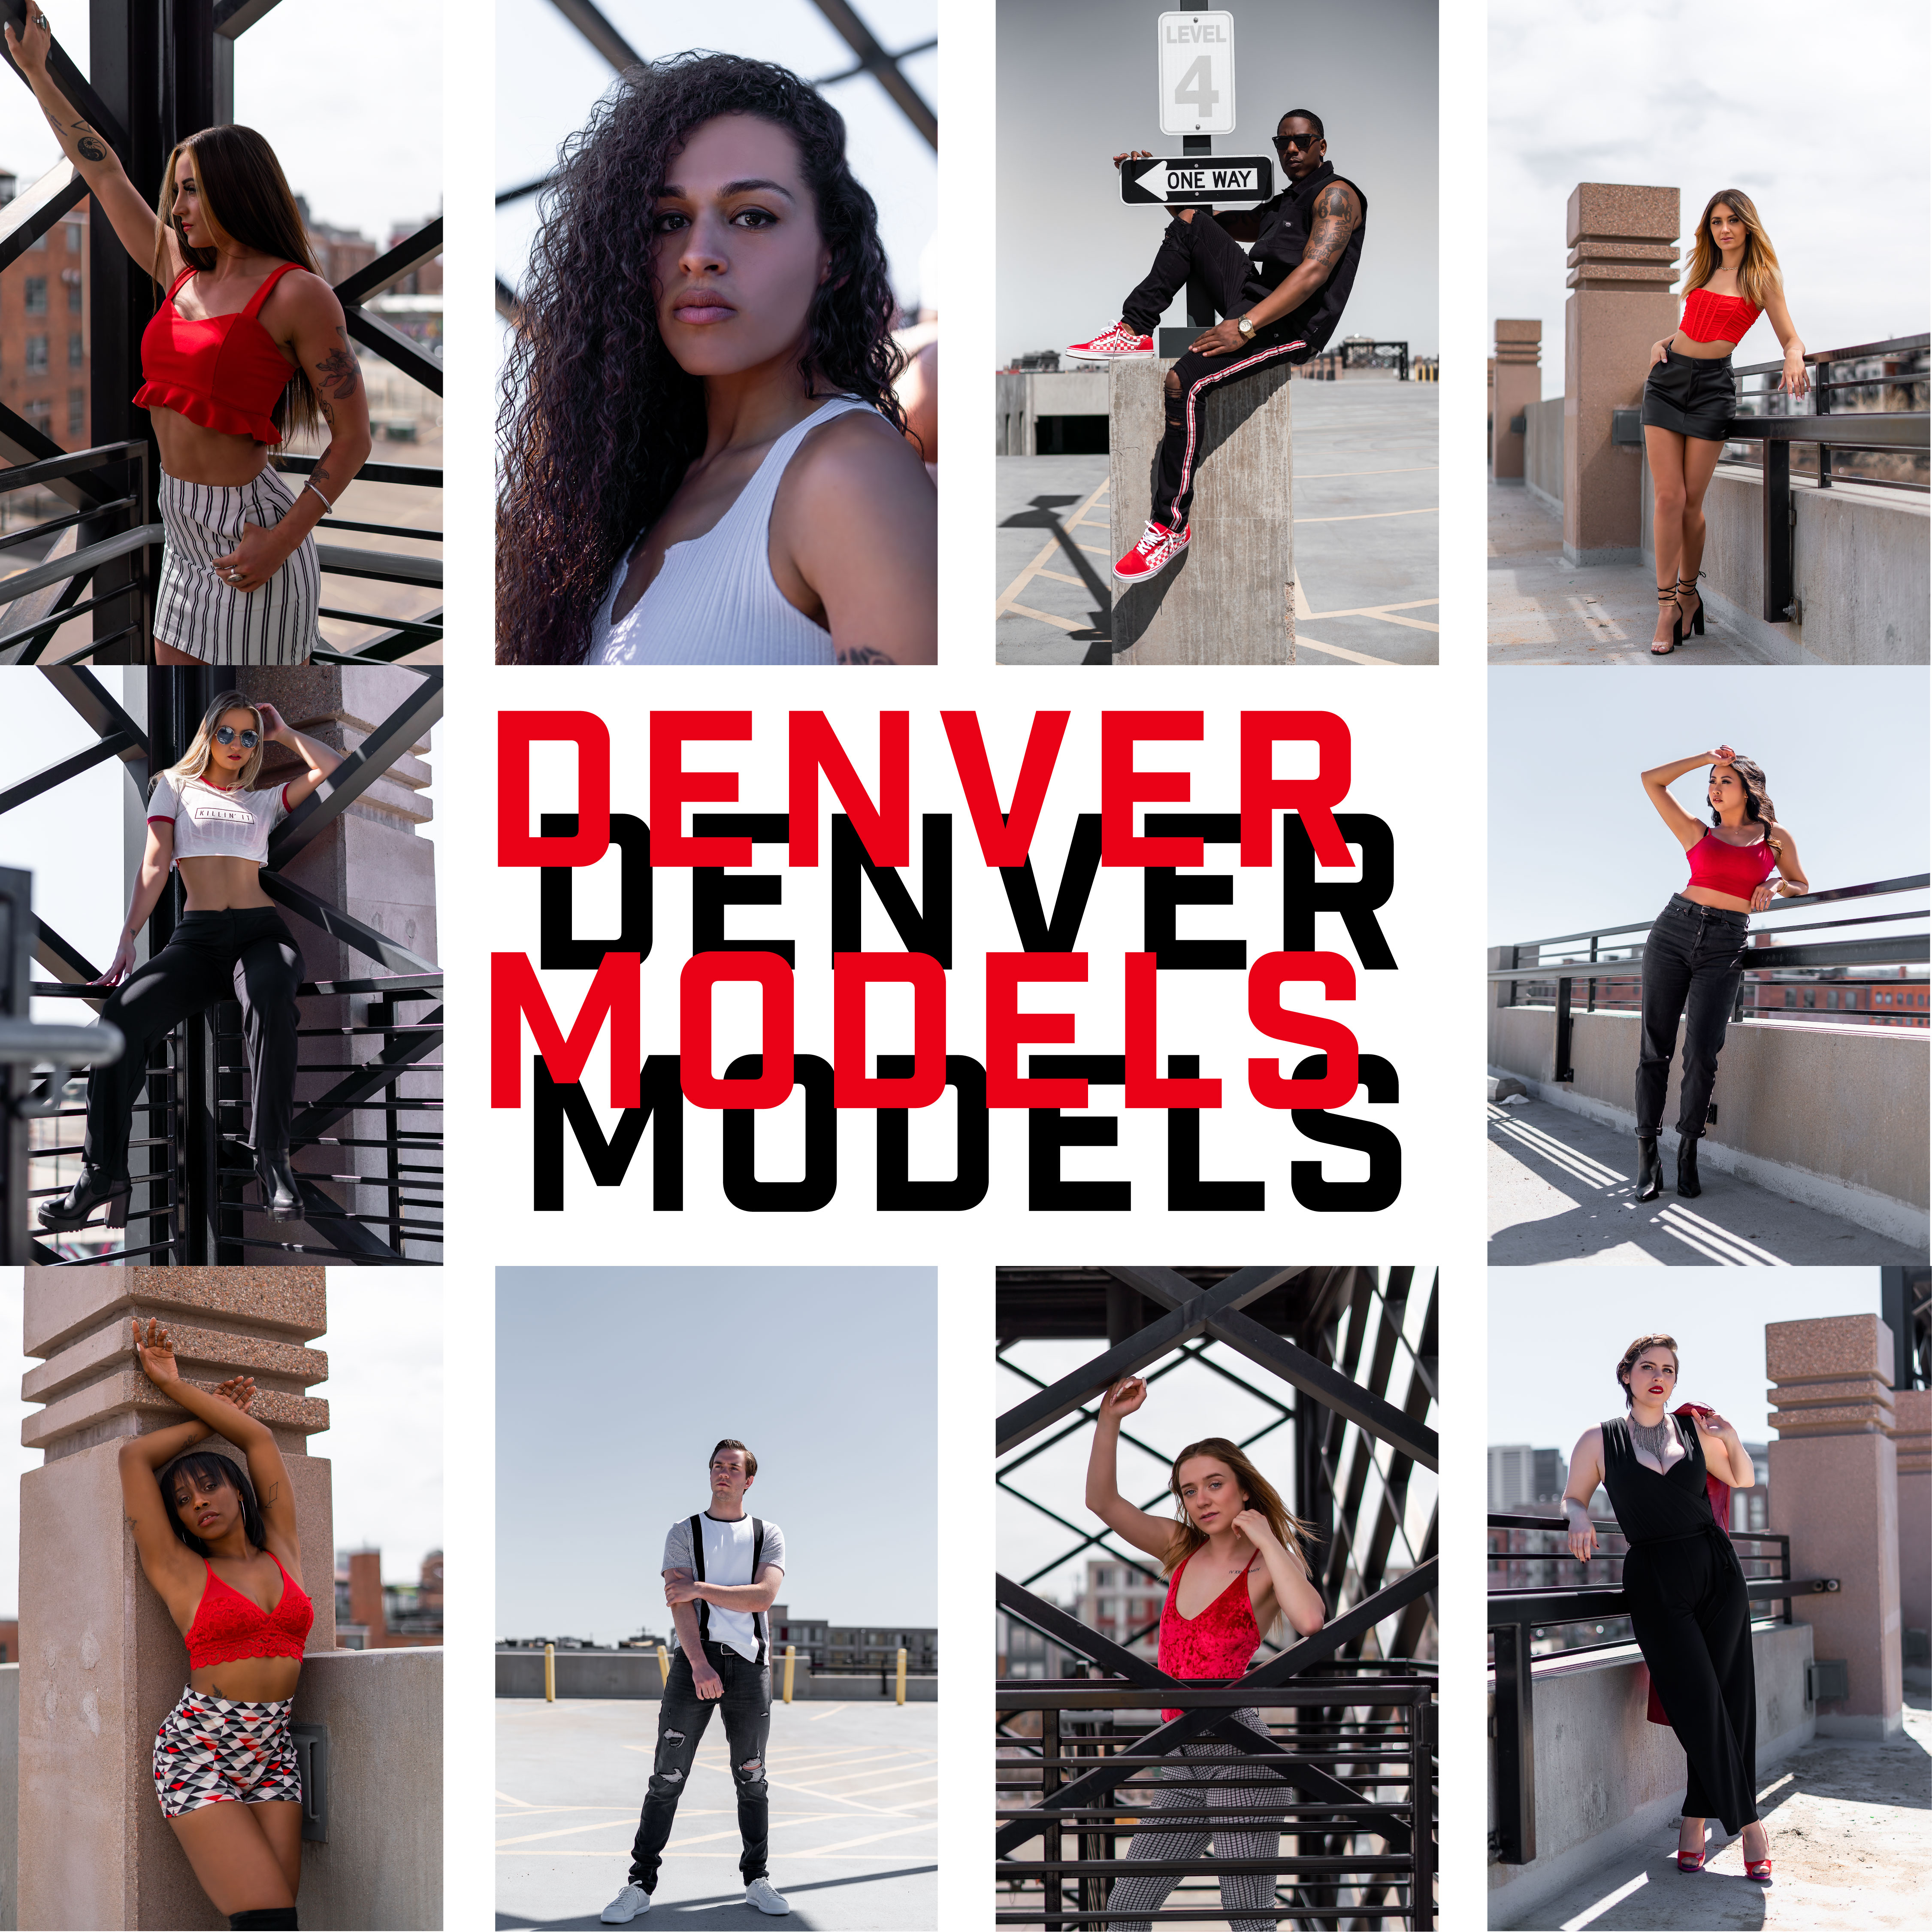 303 fashion, 303 magazine, Bradon Matthews, Colorado Fashion, Colorado Models, Denver Models, Dominic Hermosillo, Modeling, Media agency, Modeling industry